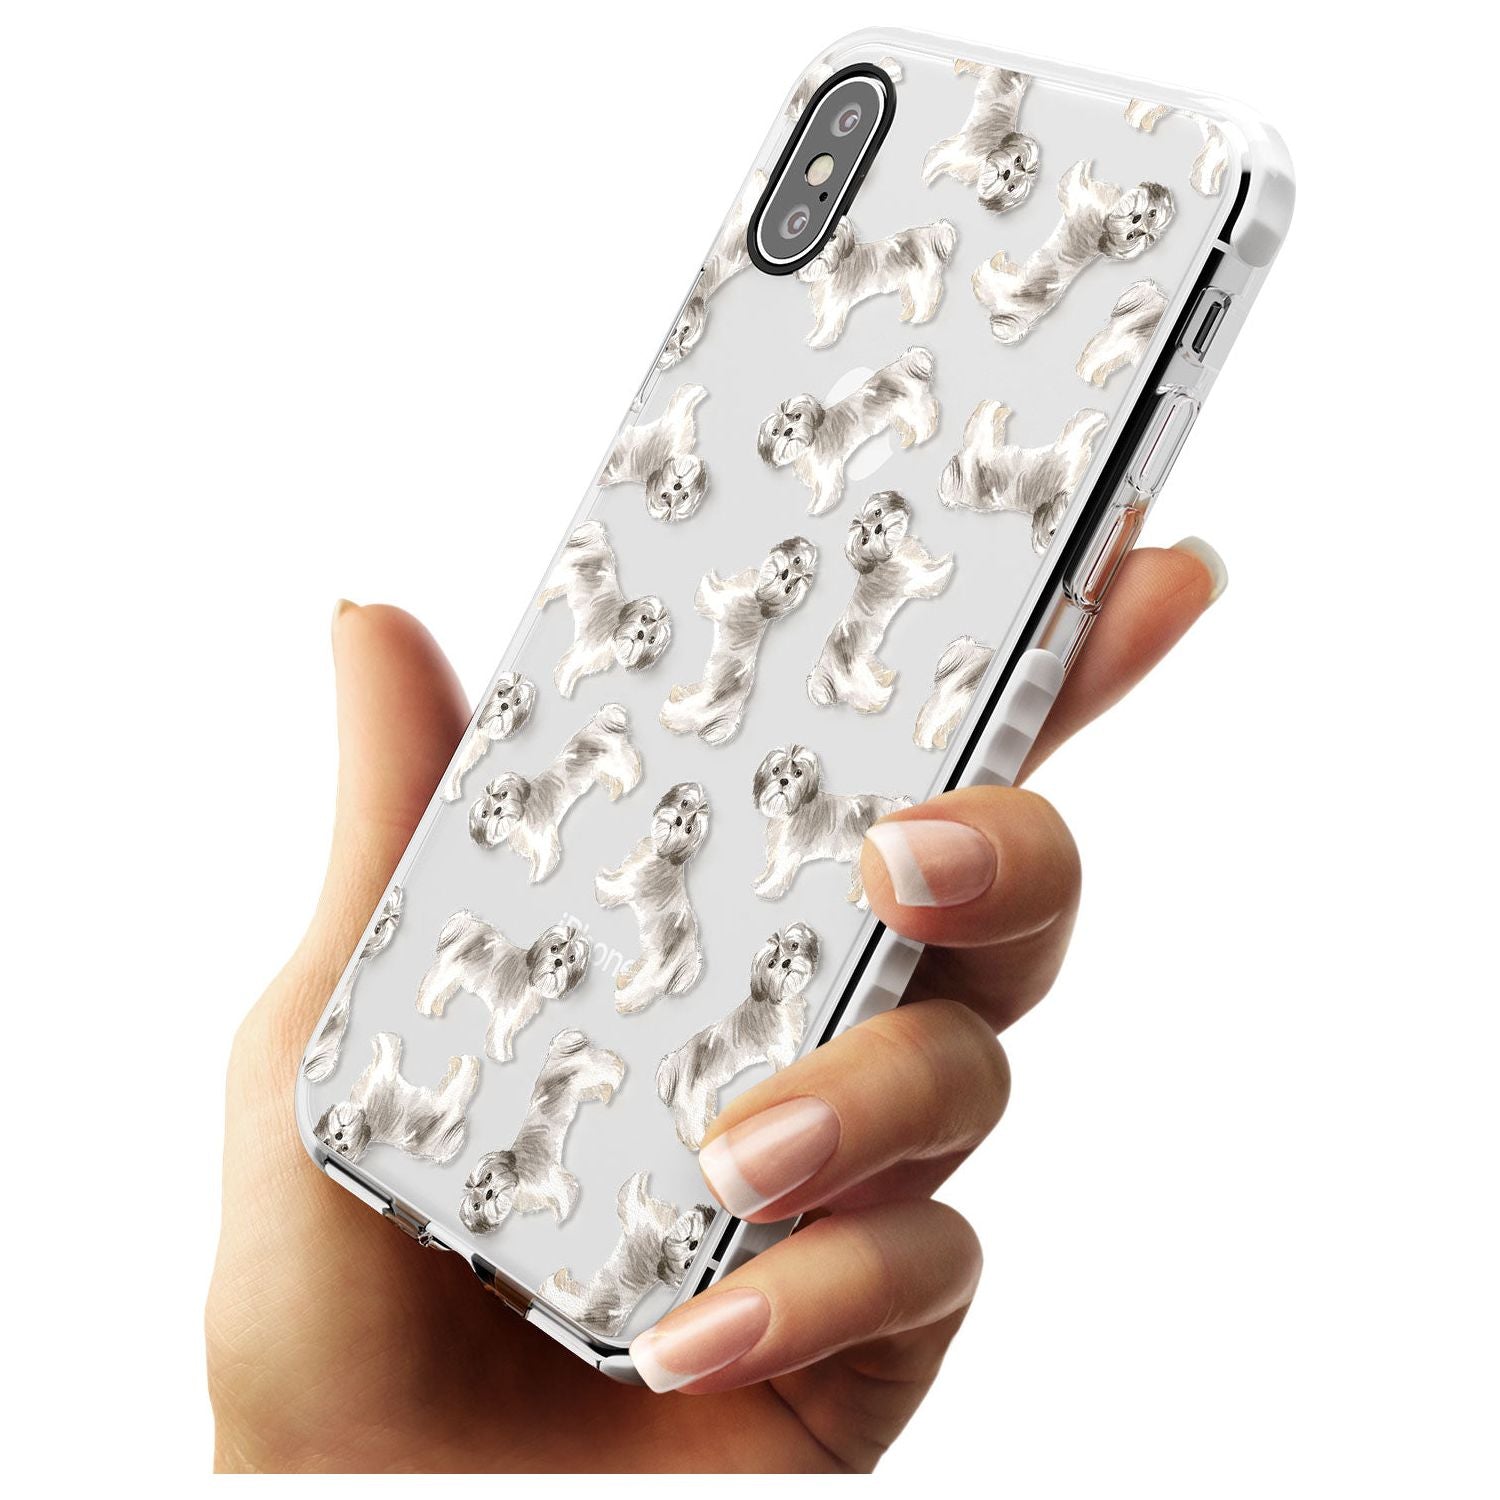 Shih tzu (Short Hair) Watercolour Dog Pattern Impact Phone Case for iPhone X XS Max XR